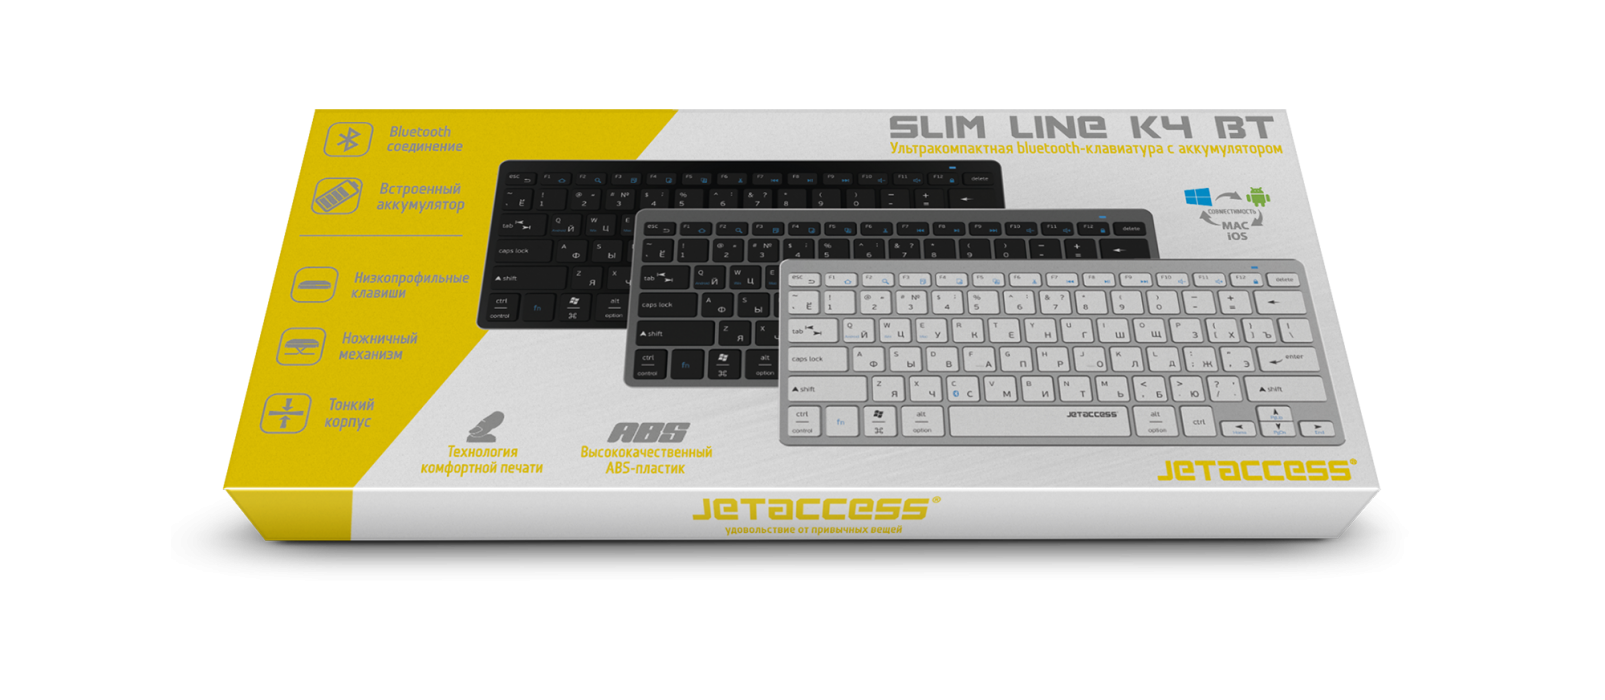 Ультракомпактная bluetooth-клавиатура с аккумулятором SLIM LINE K4 BT6